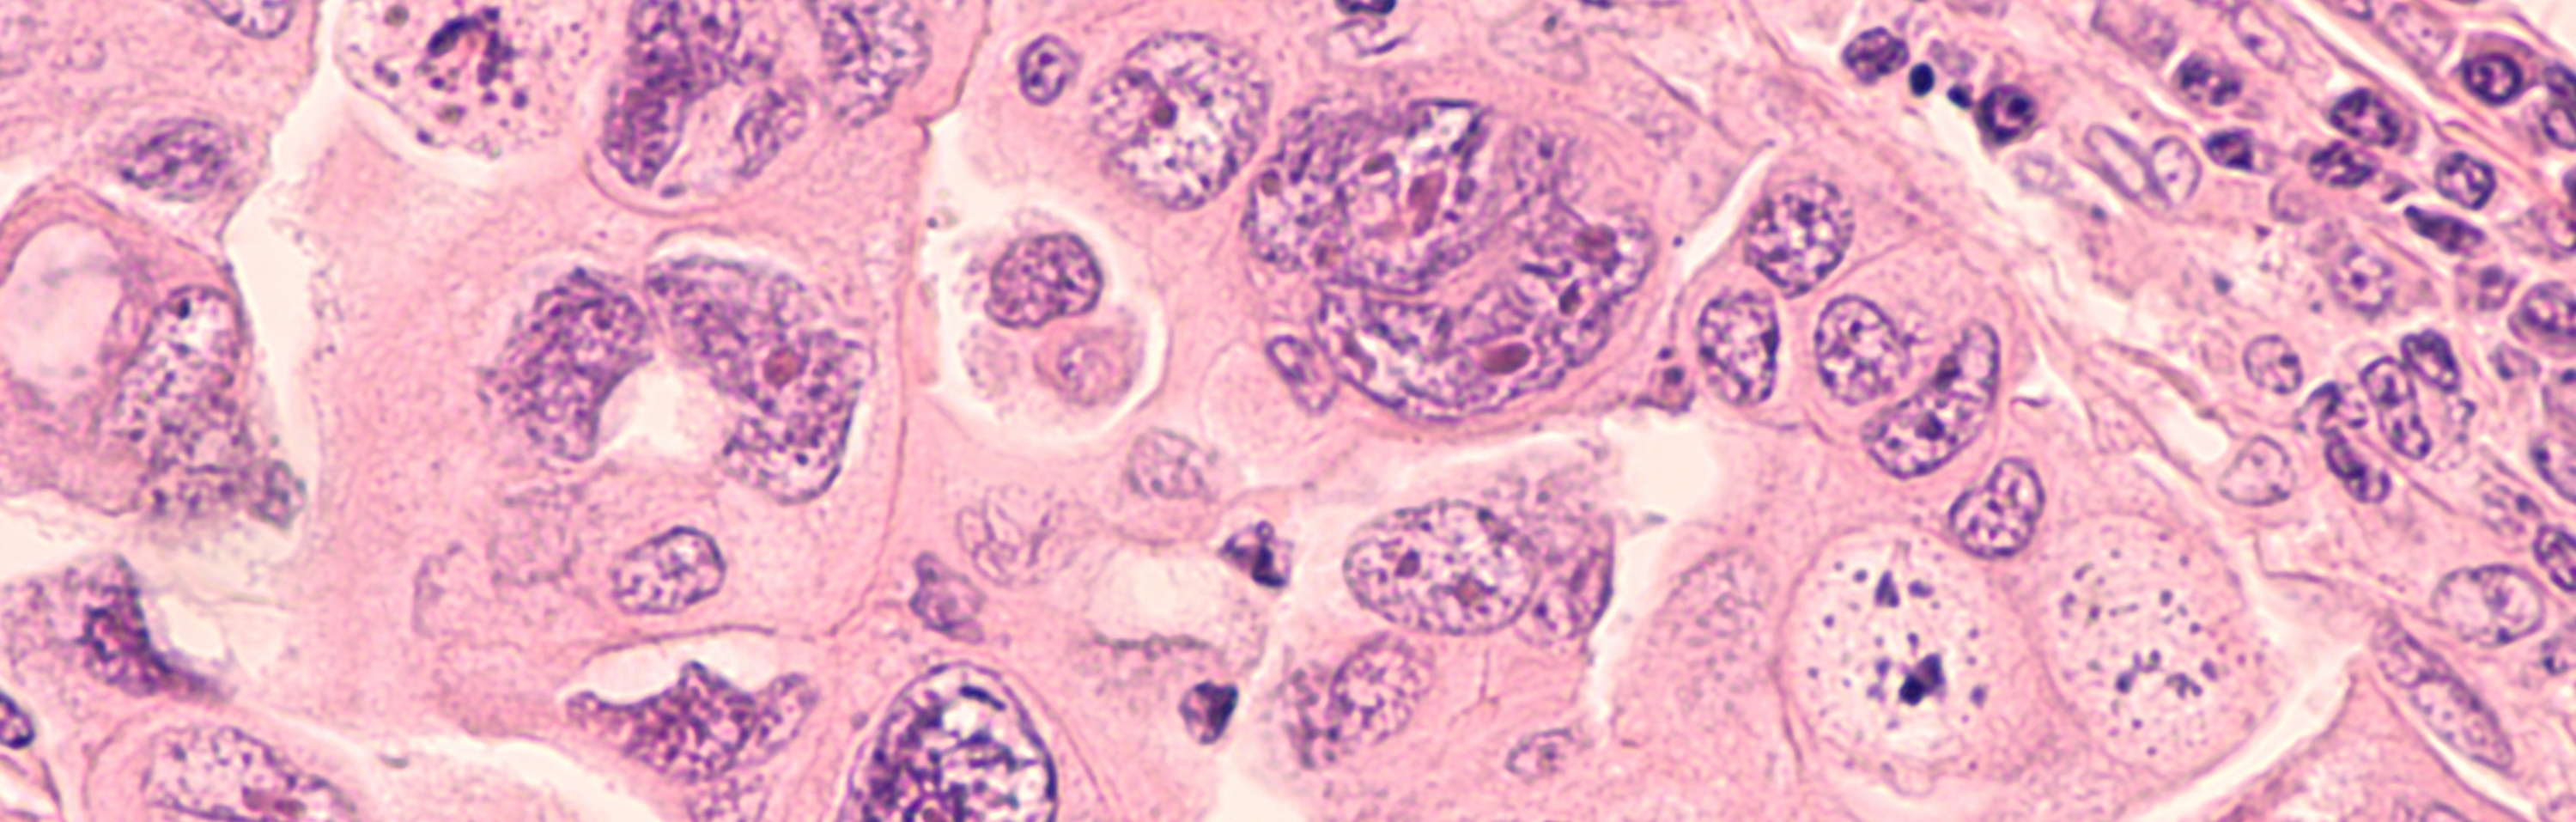 Ovarian cancer cells as seen under a microscope